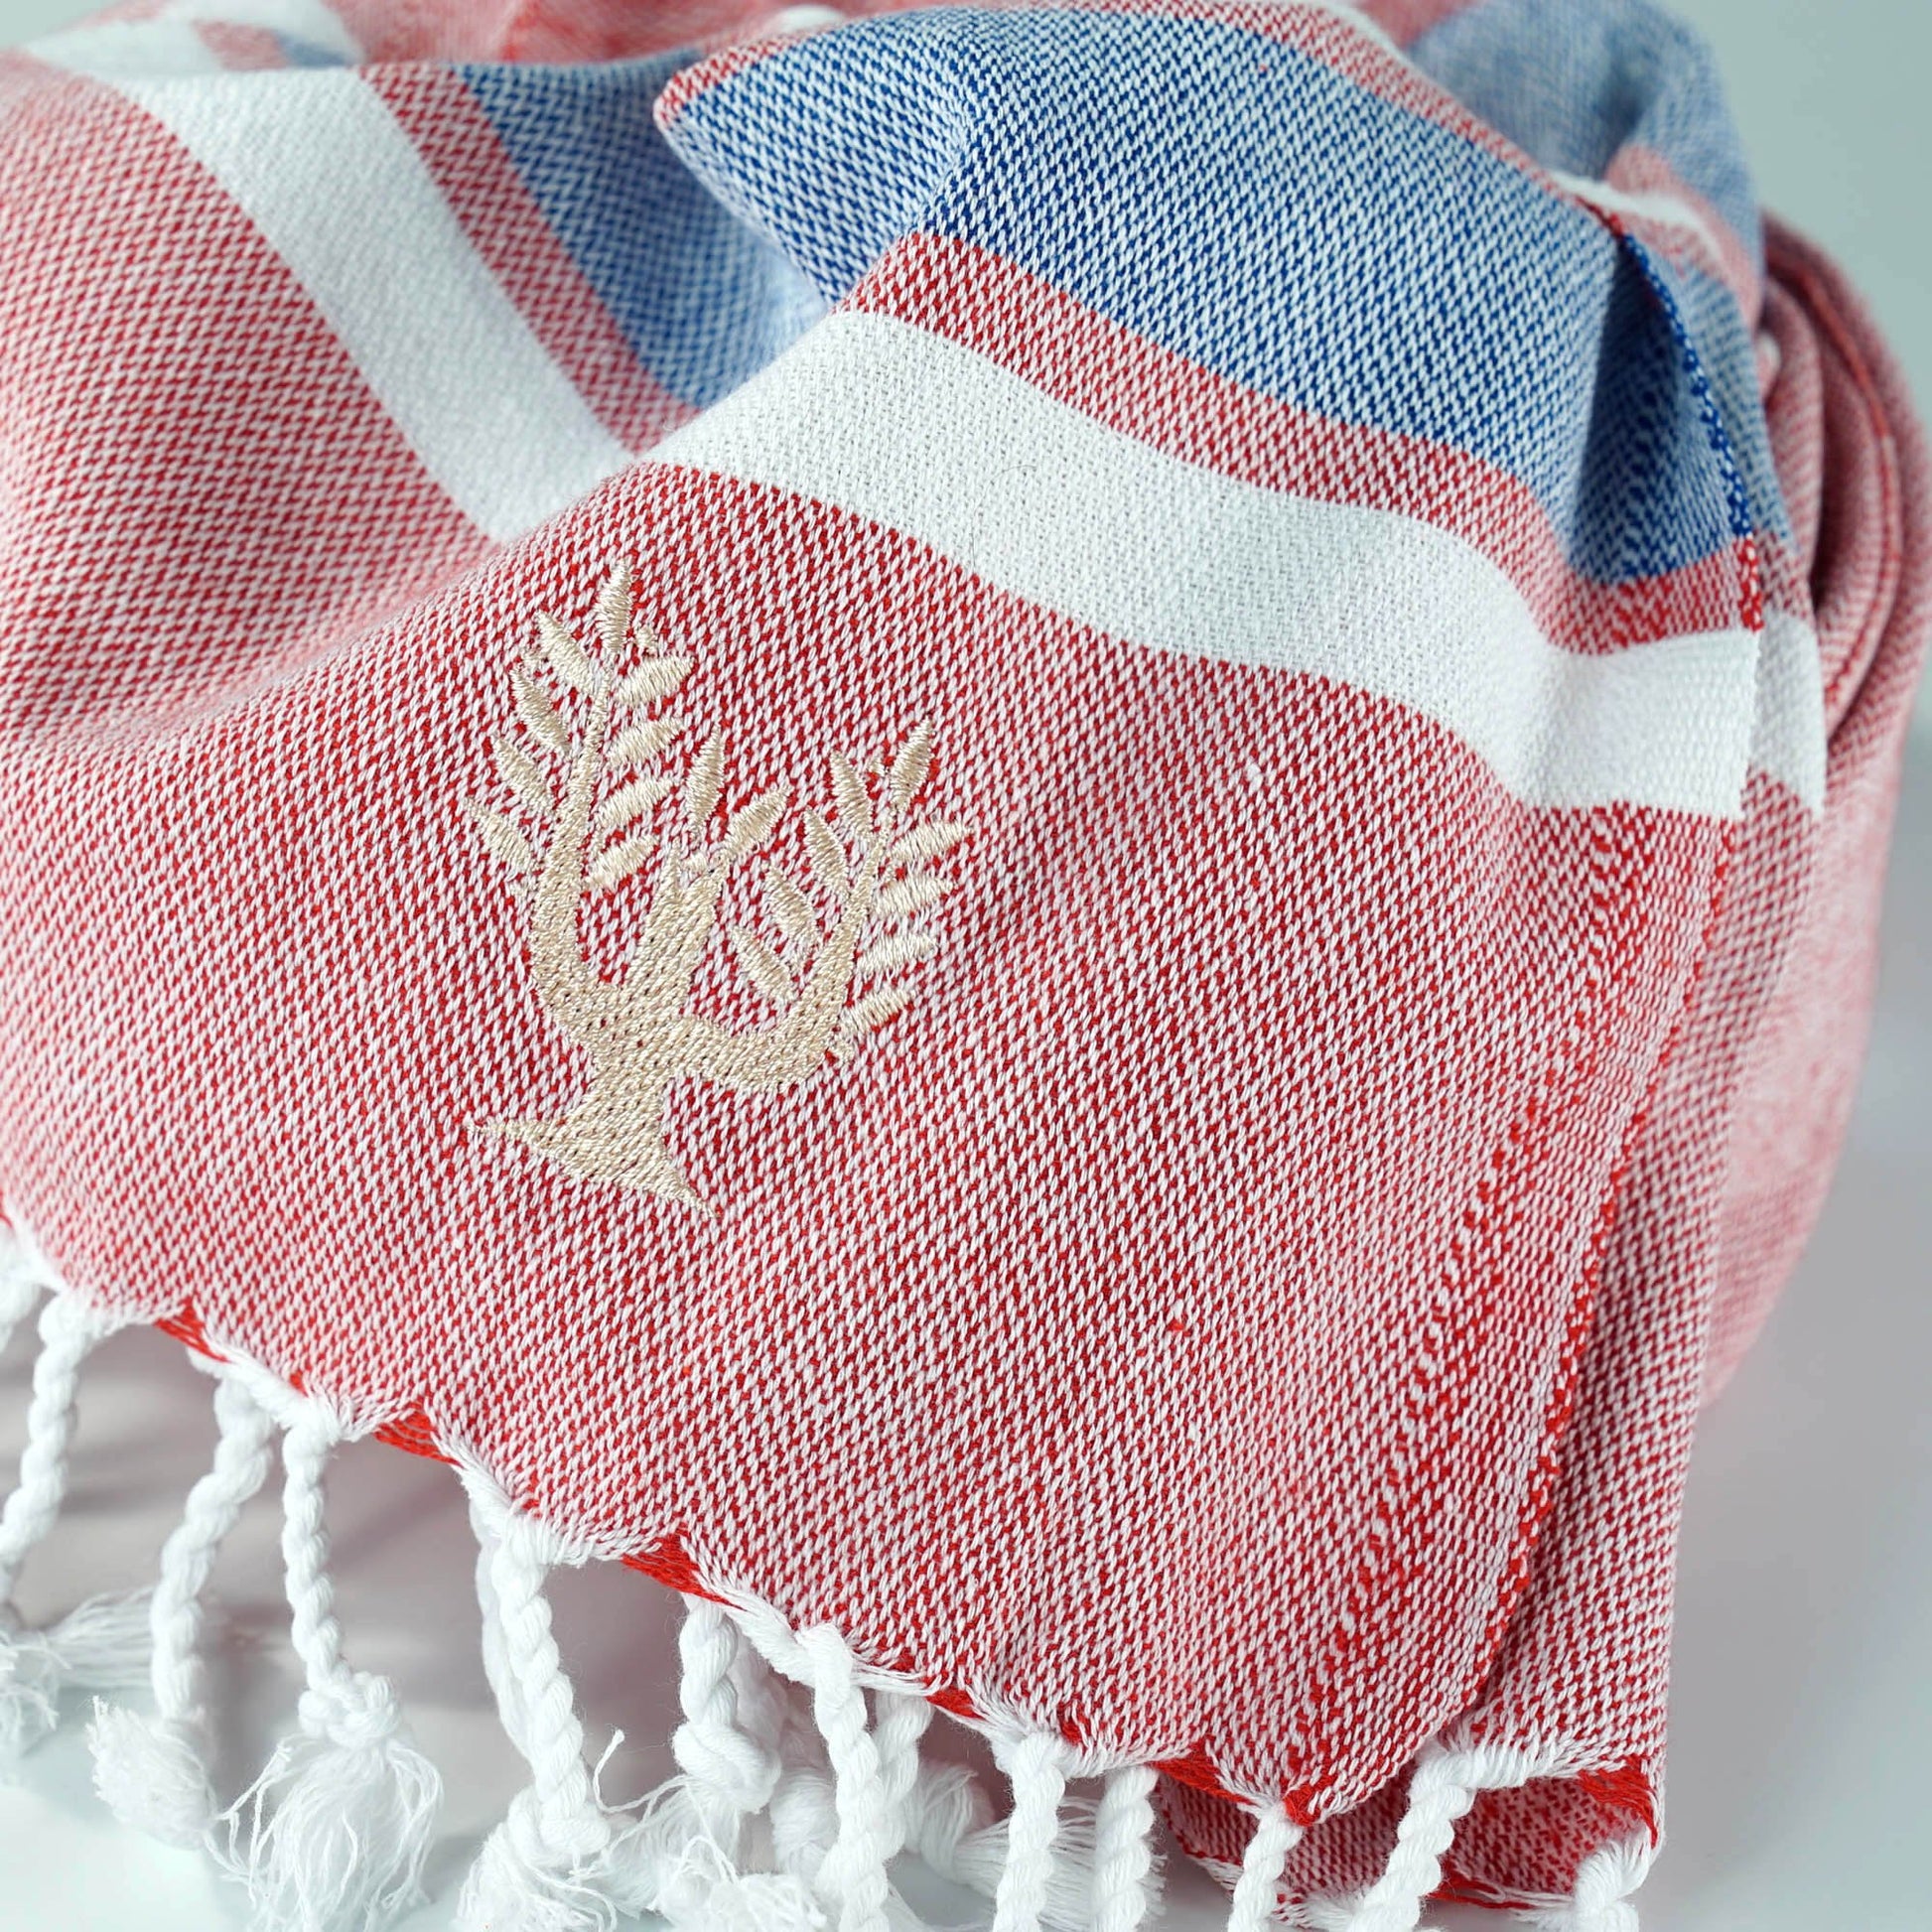 Hampton Hammam Towel | Red, White & Blue | Wildash London - Wildash London